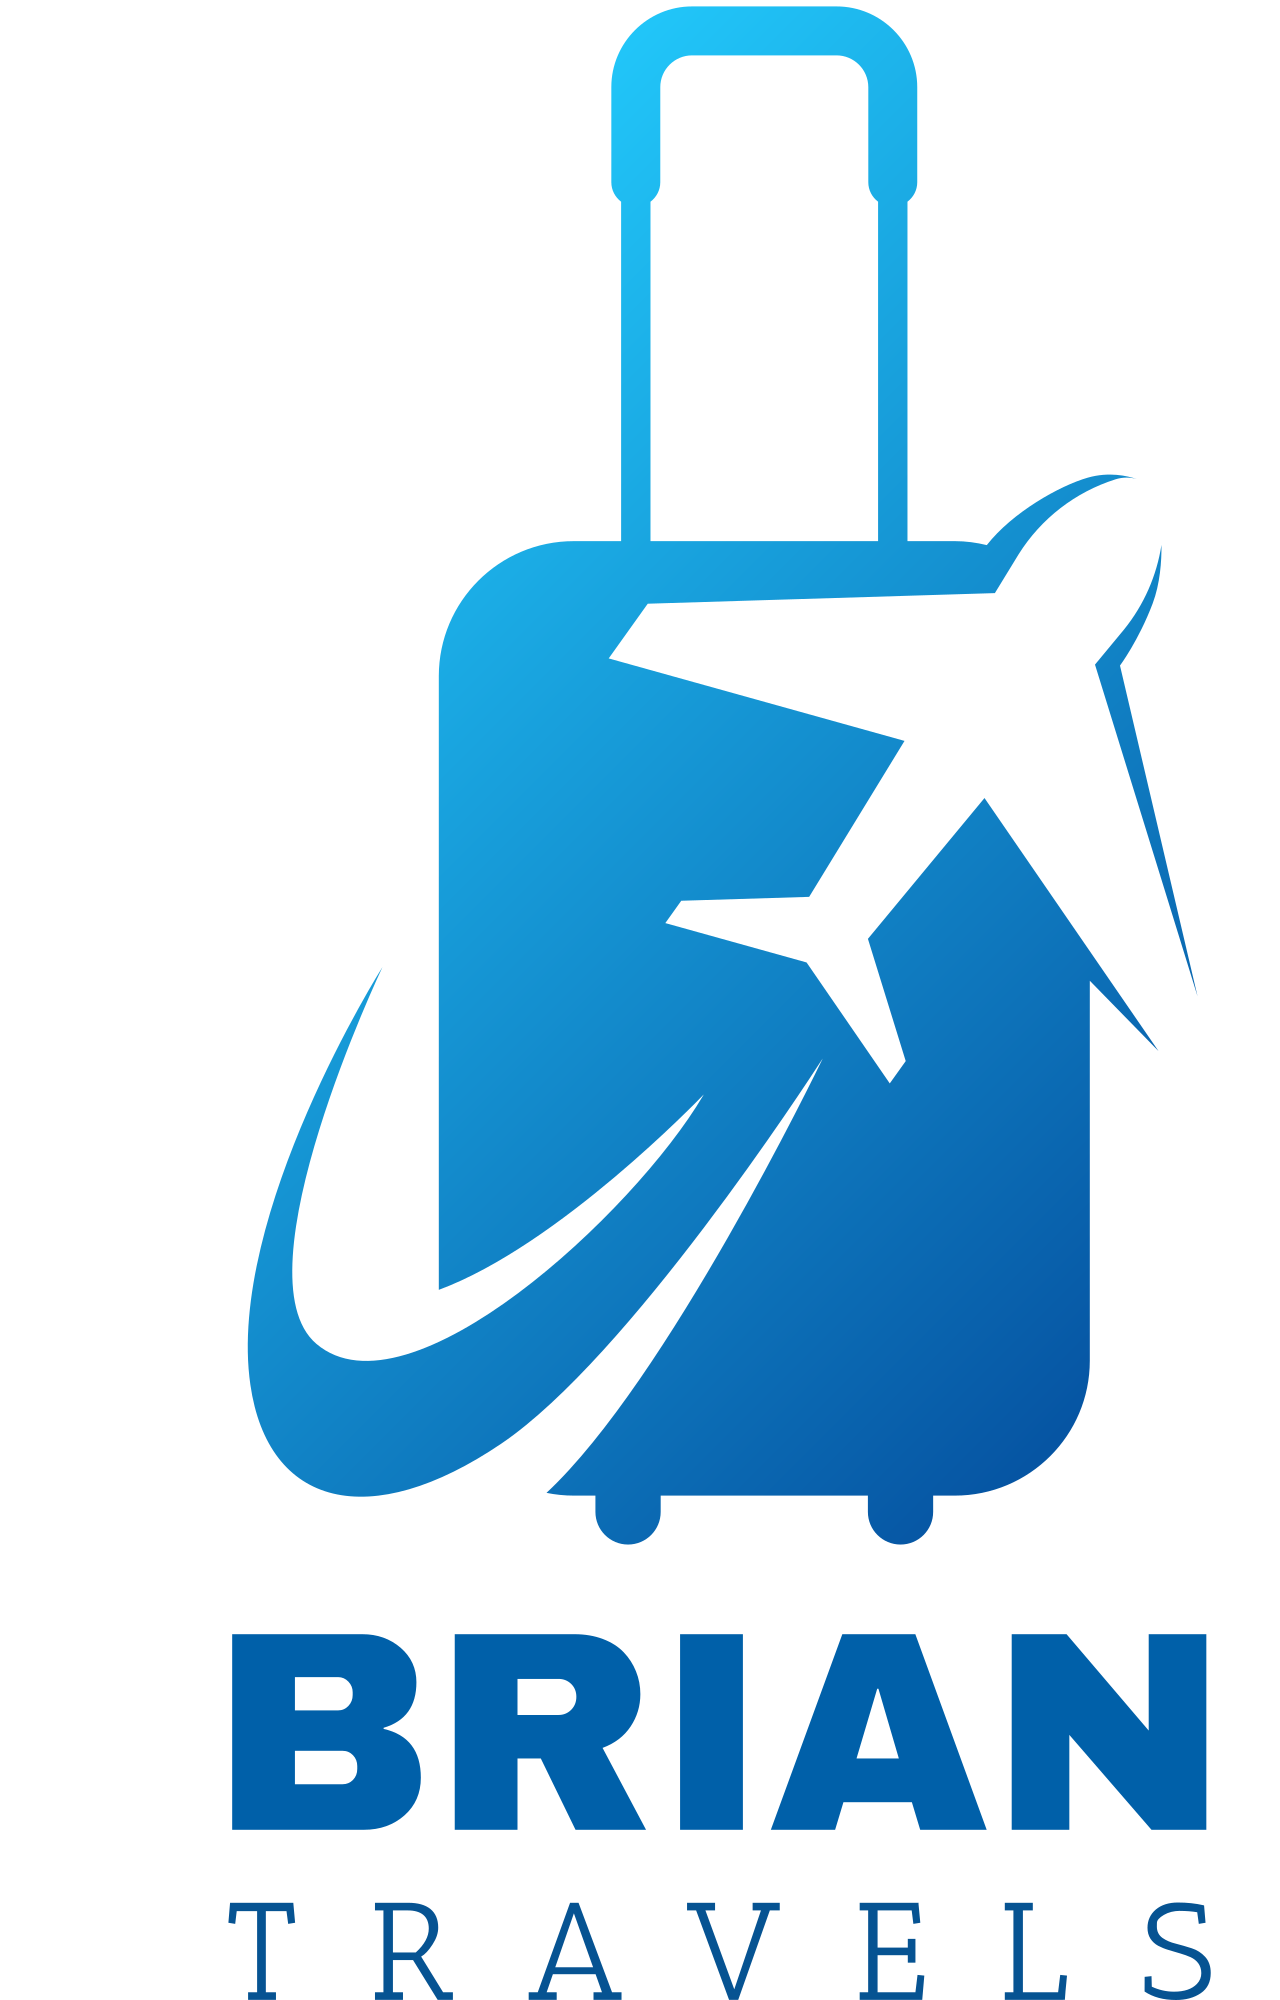 Brian Travels's logo